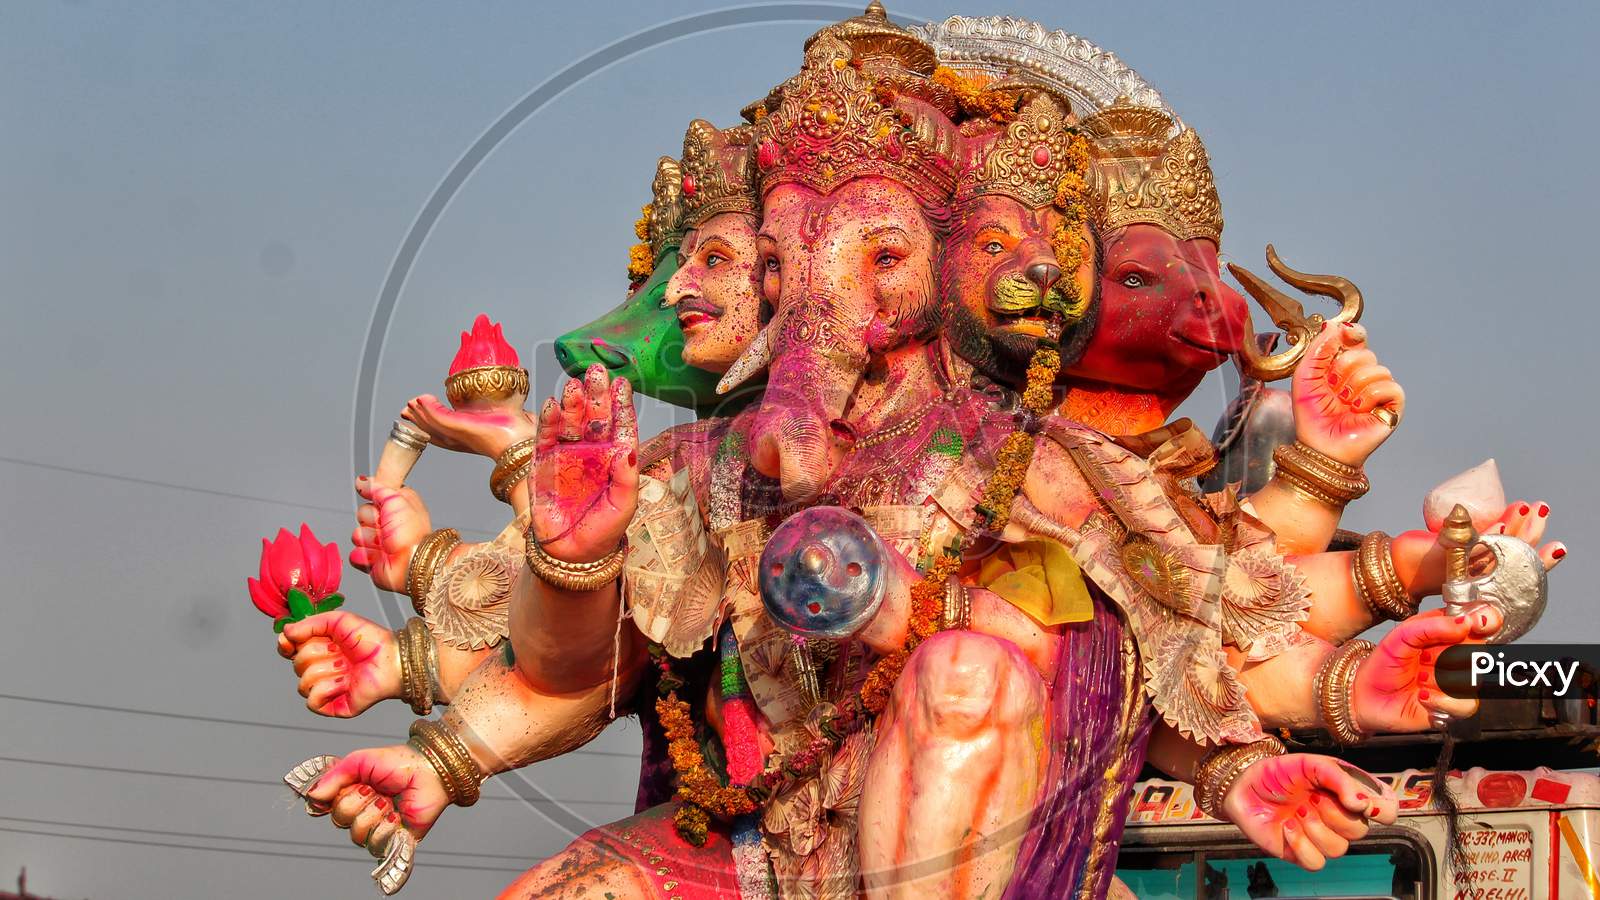 People Carrying Hindu God Idol Ganesh For Holy Immersion (Ganpati Visharjan) At The Ganges River